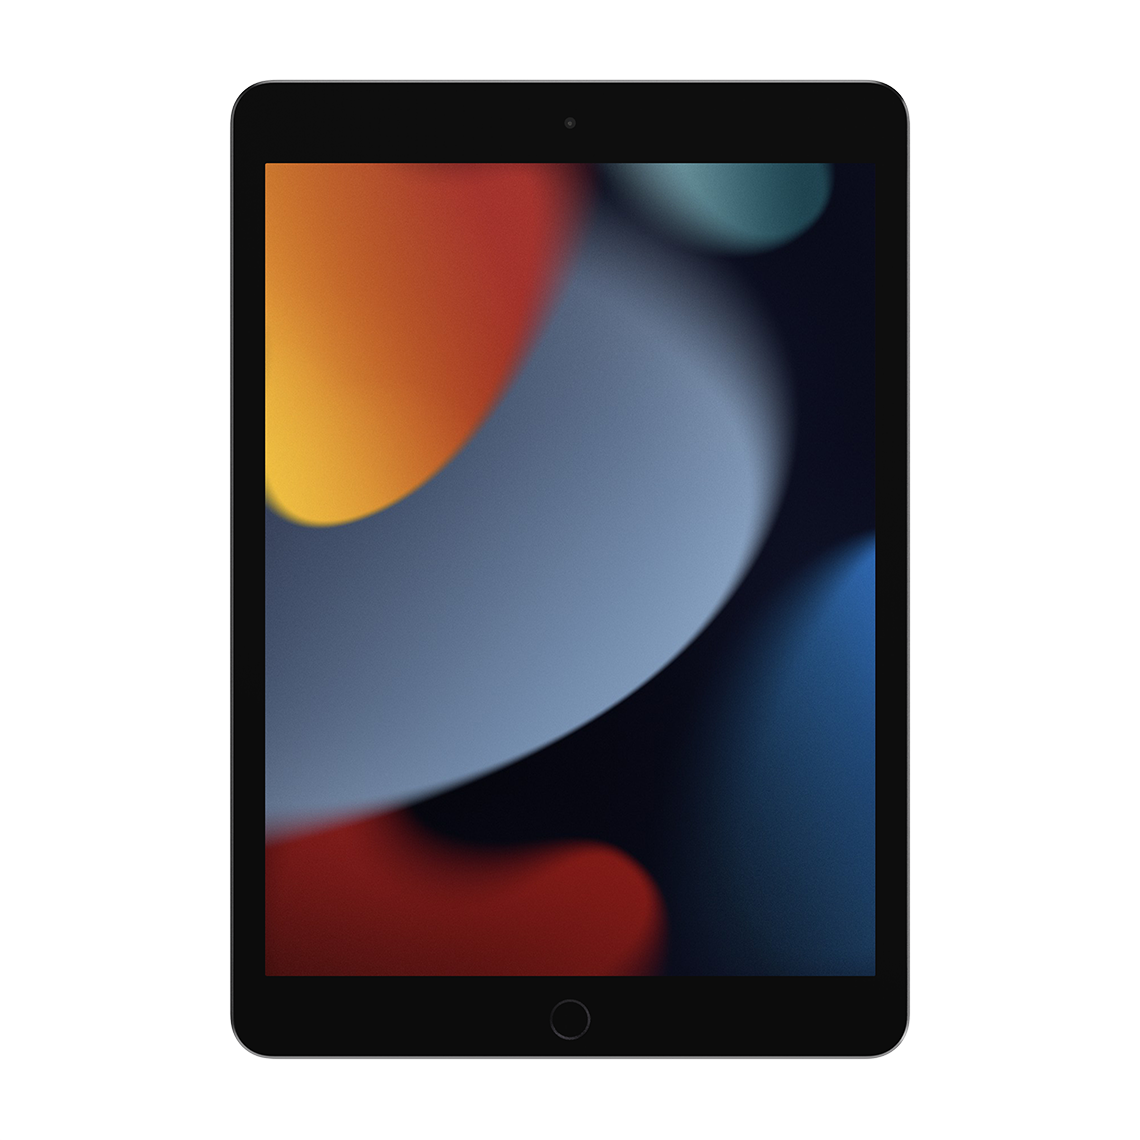 Apple iPad 10.2-inch 9th Generation - Space Gray - 64GB, Wi-Fi, Open Box